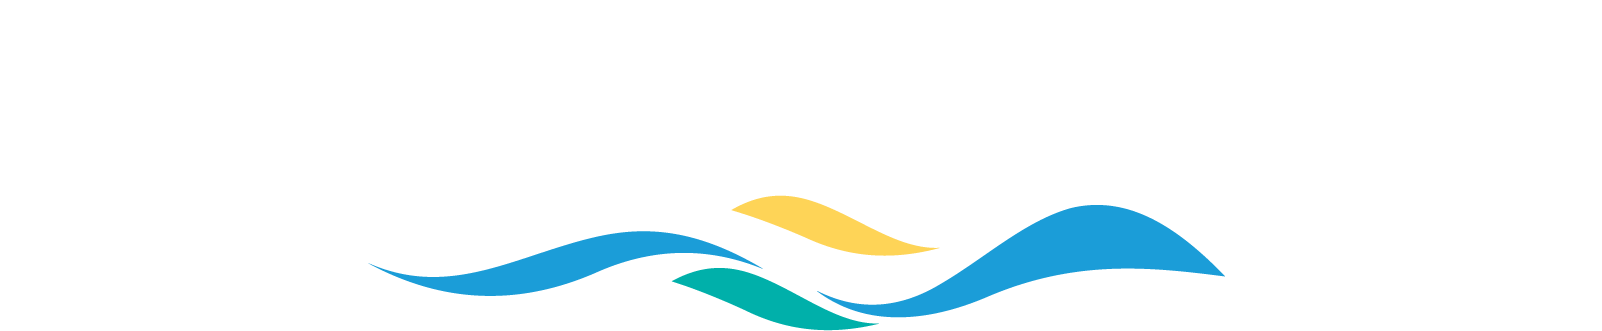 corn hill navigation logo